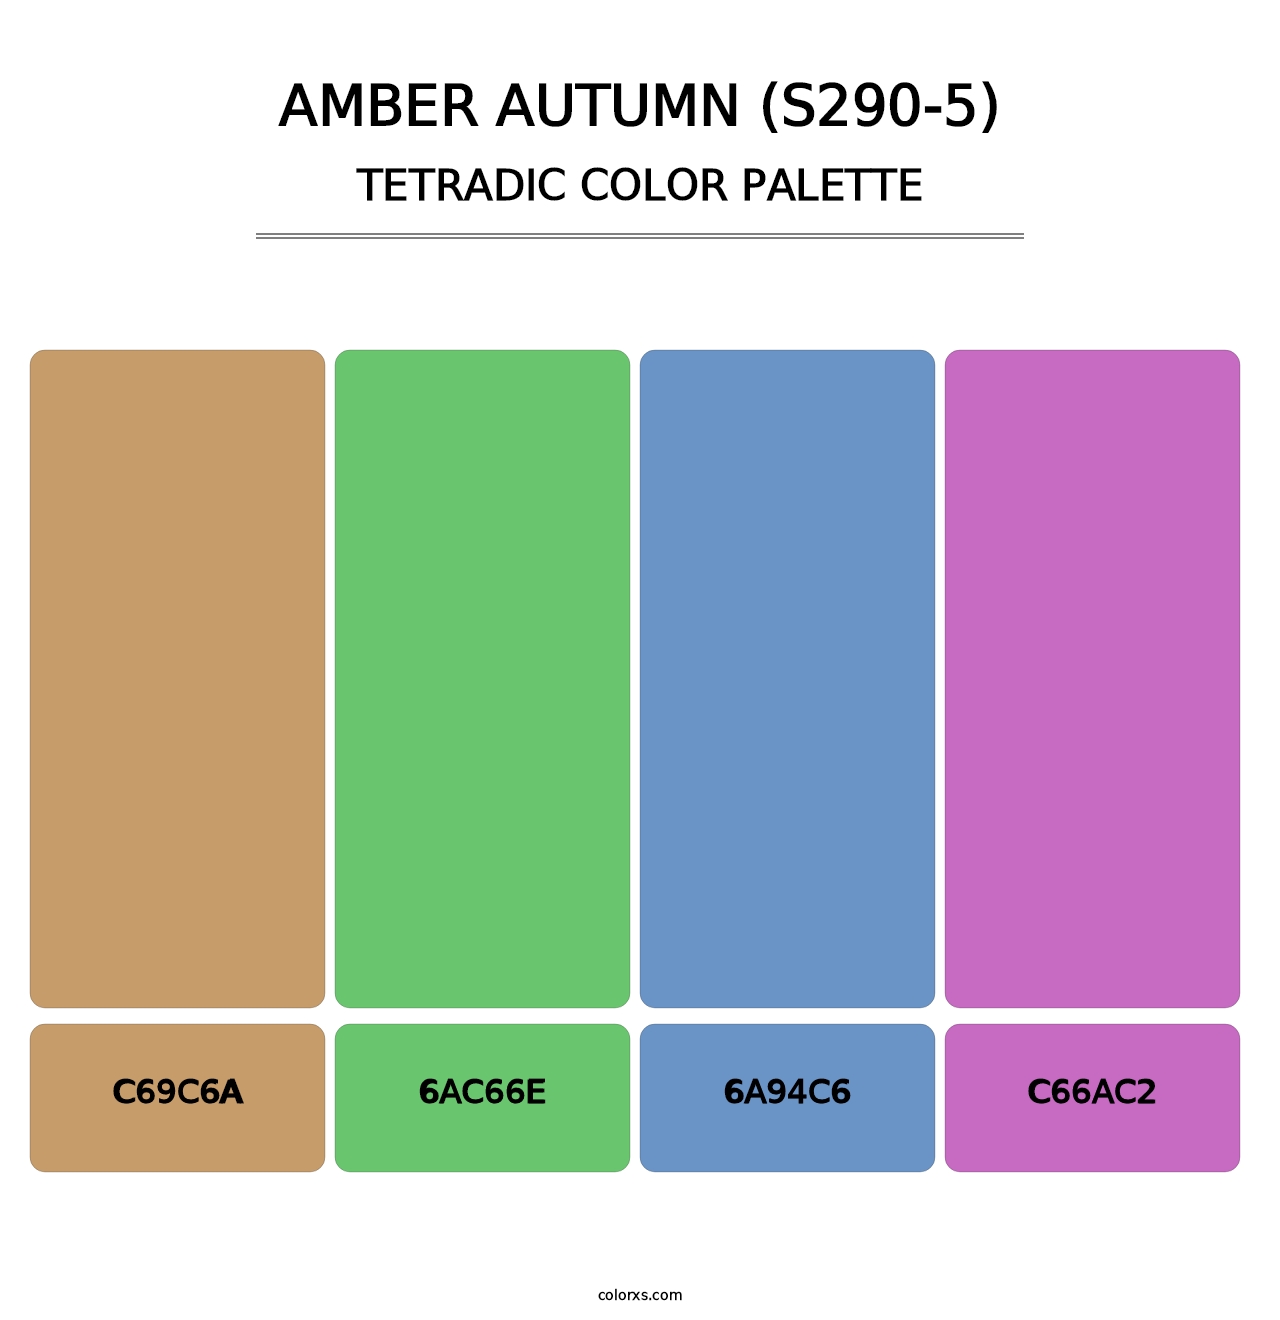 Amber Autumn (S290-5) - Tetradic Color Palette